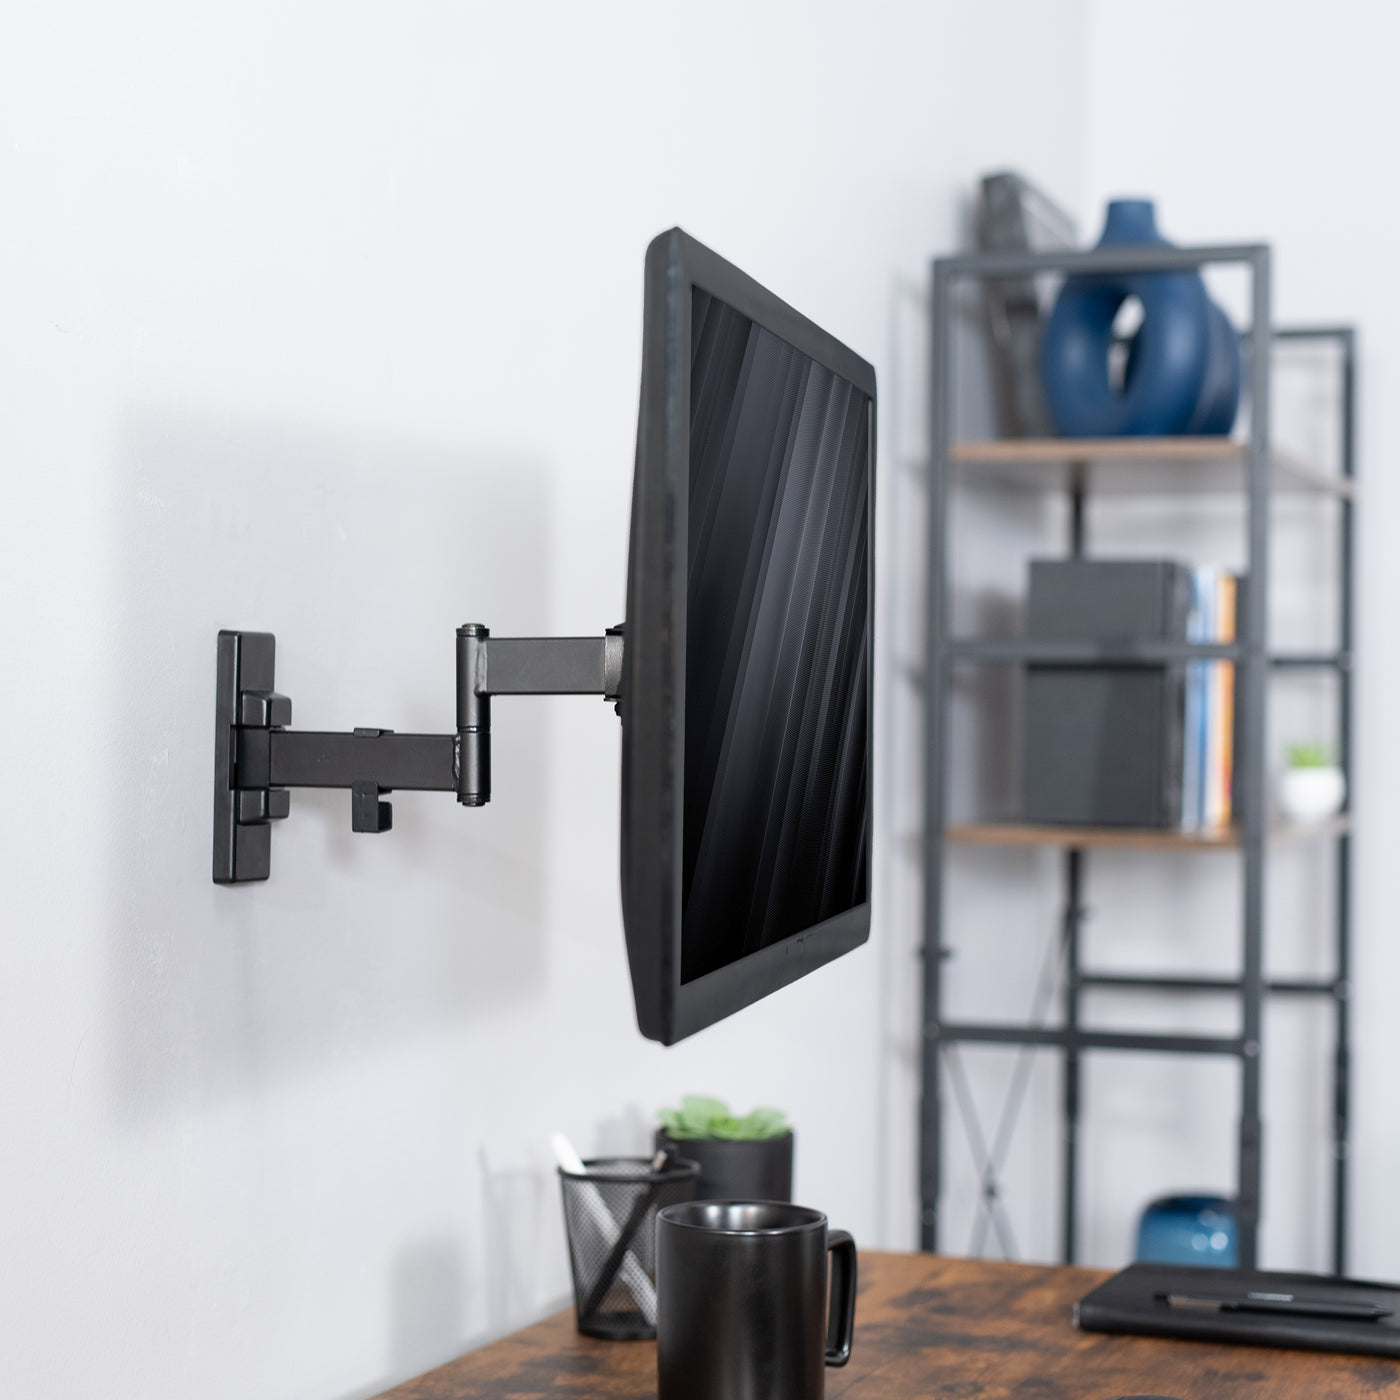 Sturdy adjustable single monitor ergonomic wall mount for office workstation.